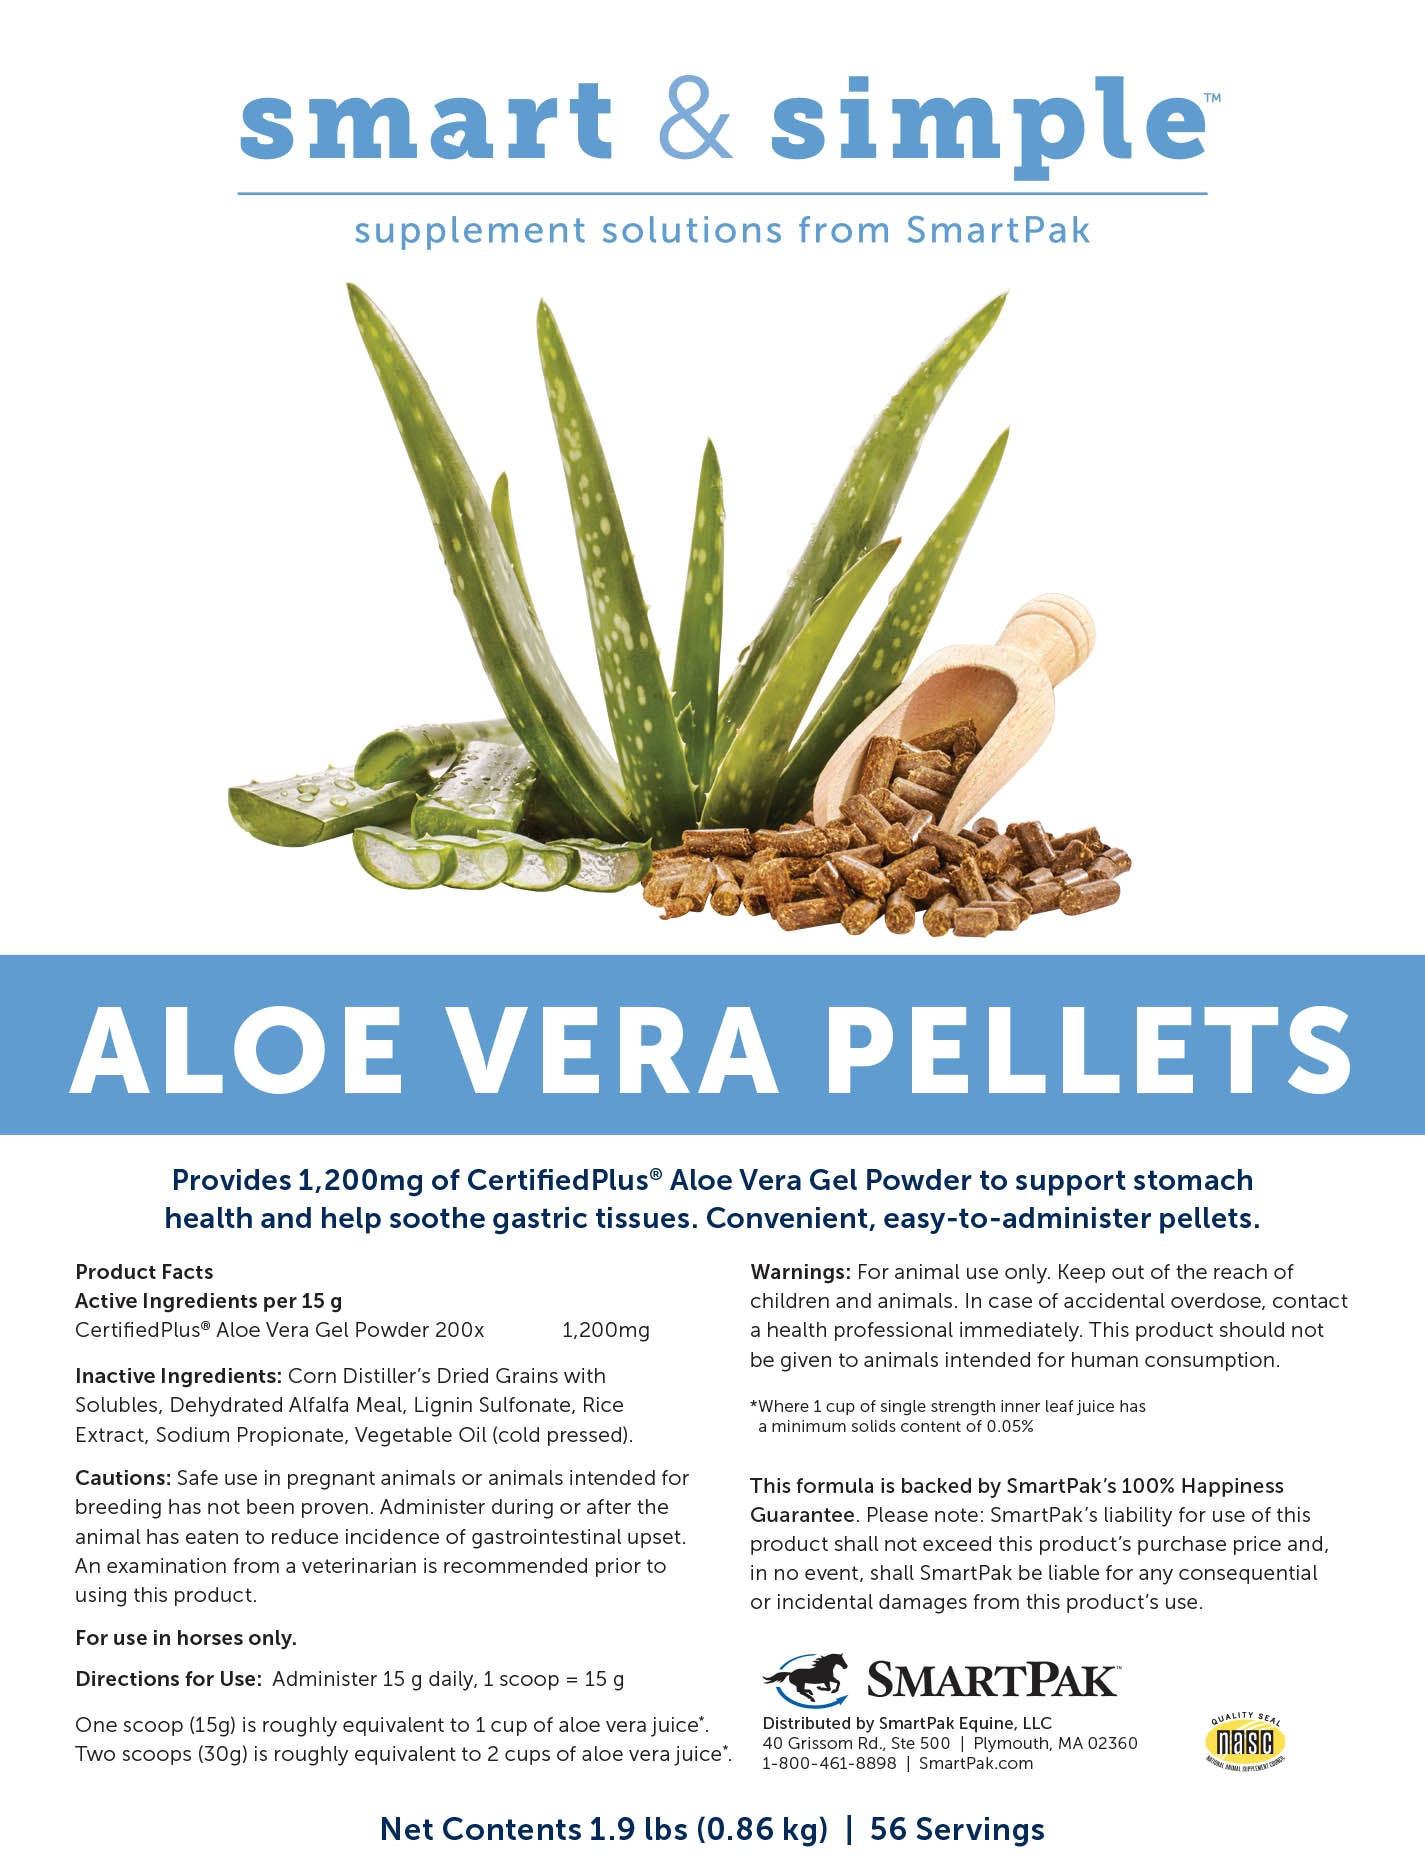 aloe pellets for horses